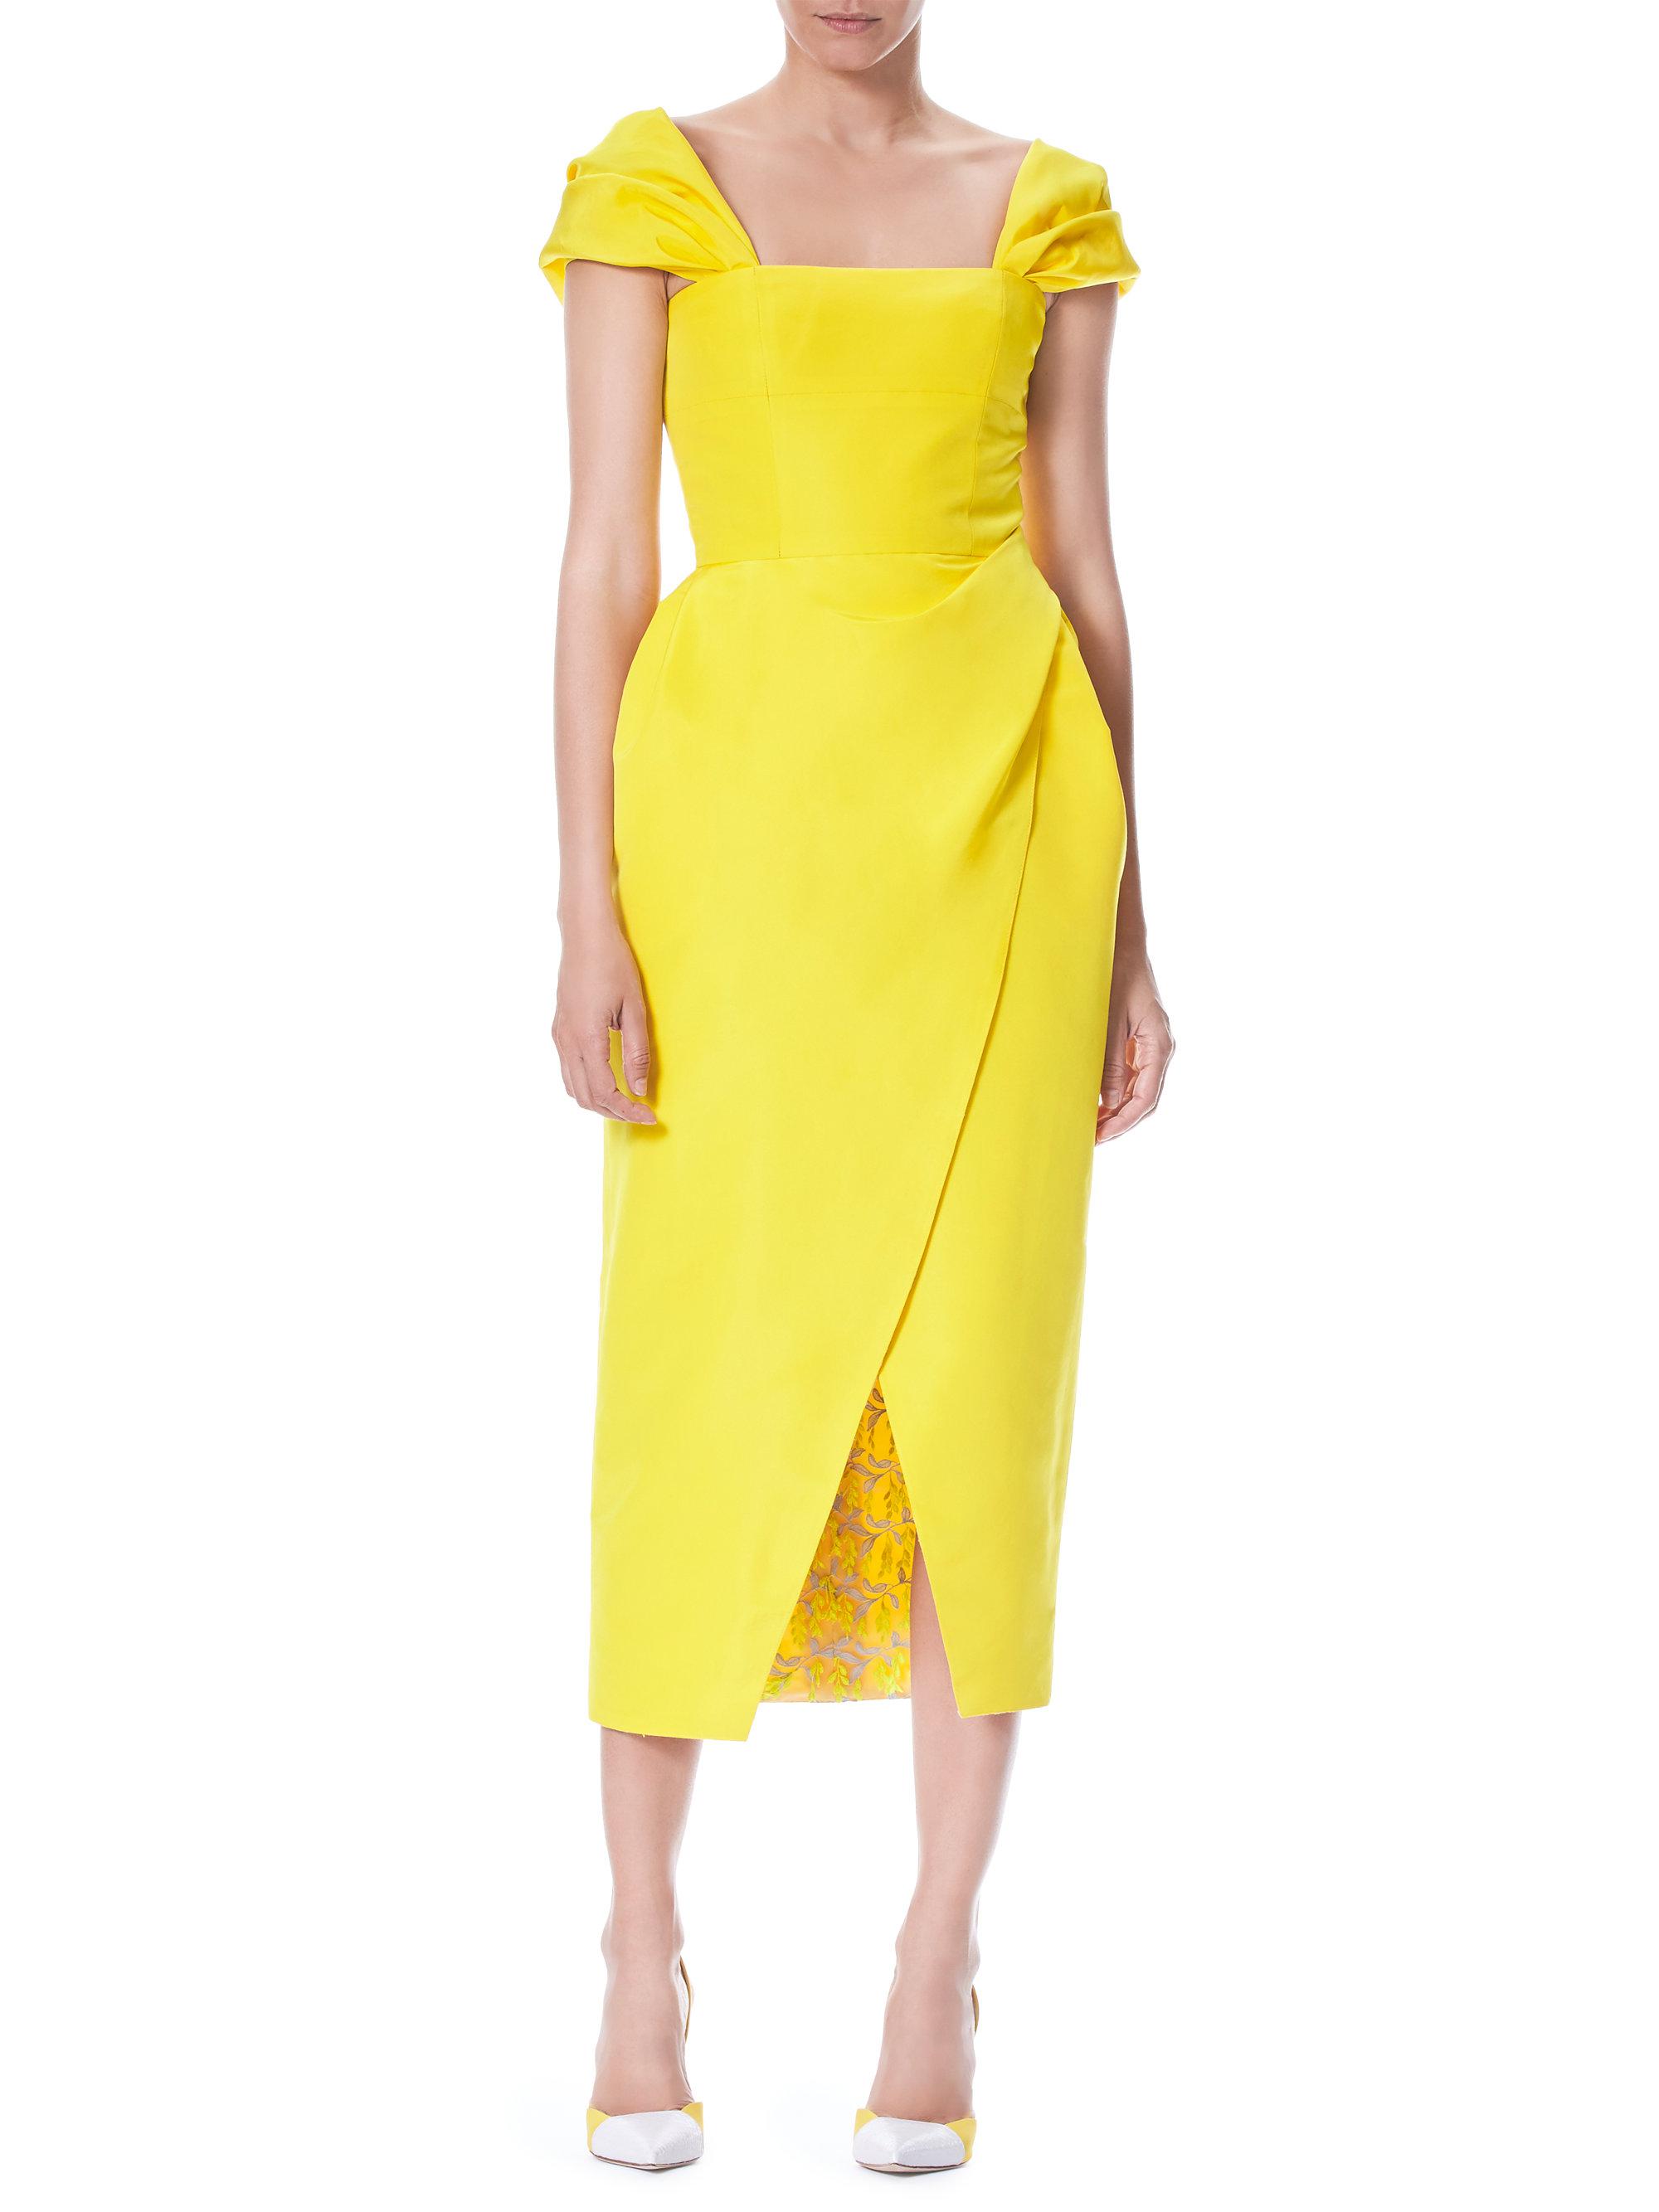 Carolina Herrera Off-the-shoulder Cocktail Sheath Dress in Yellow - Lyst